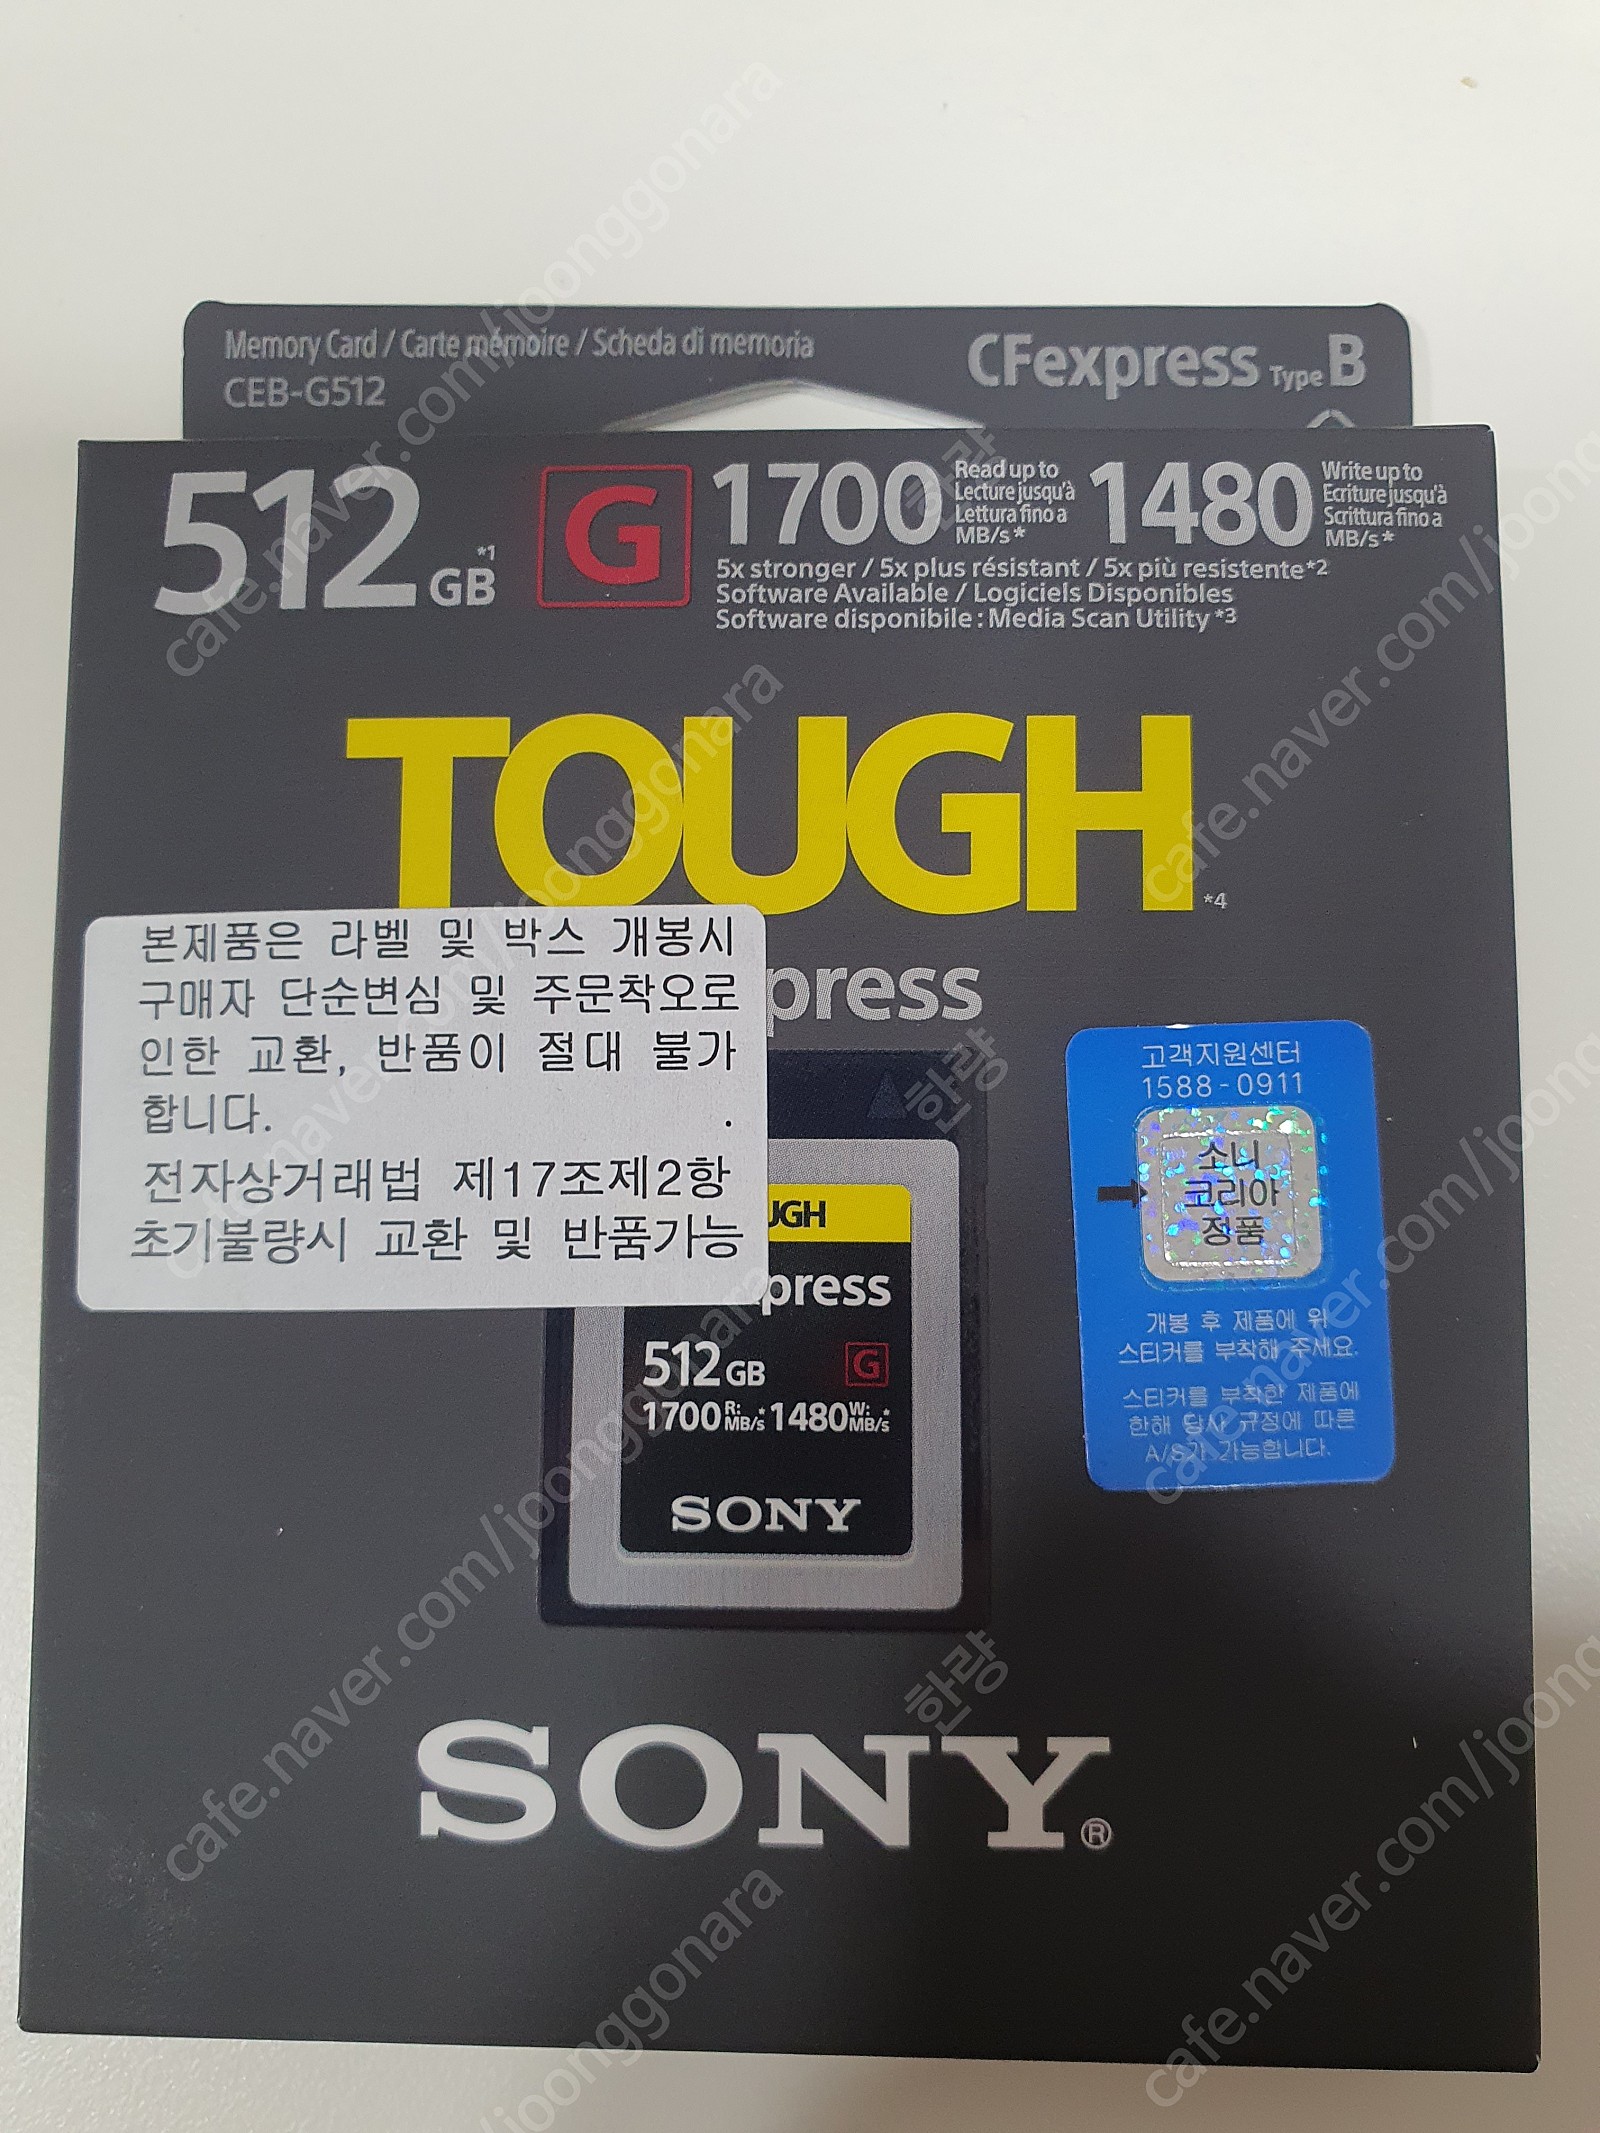 Sony CFexpress Tough G Type B 256GB, 512GB